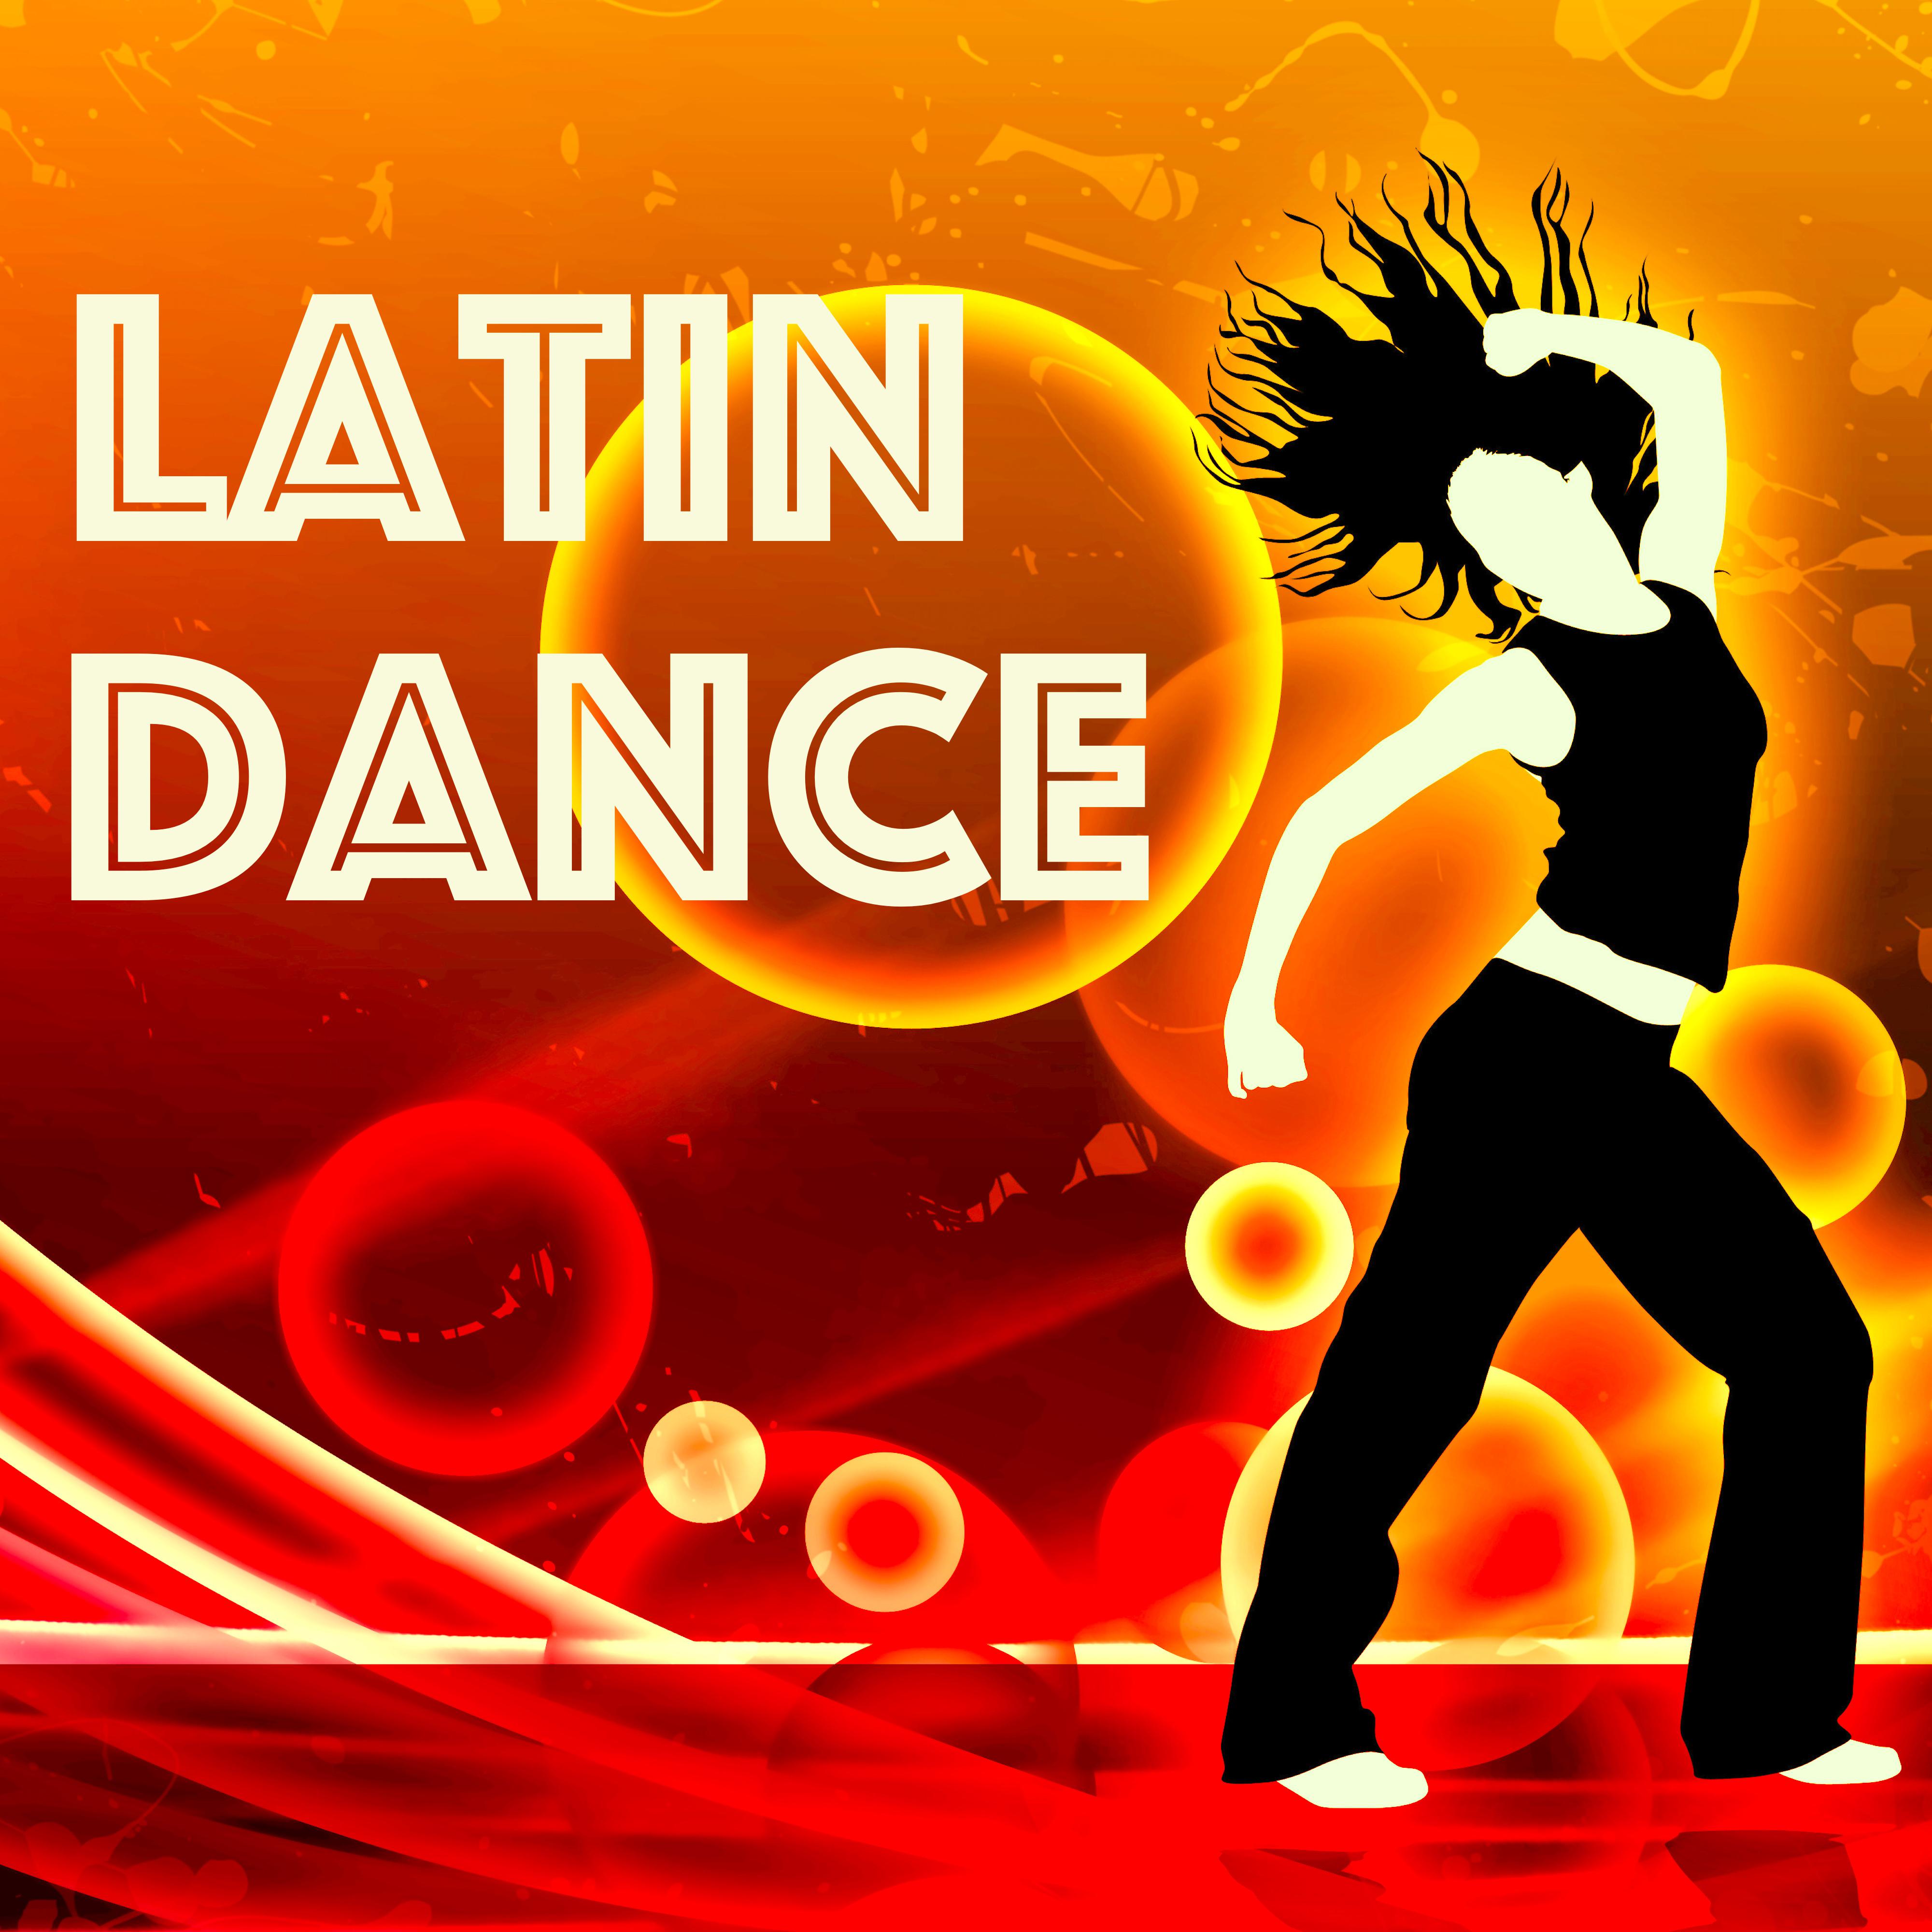 Latin Dances (World Cup 2014)